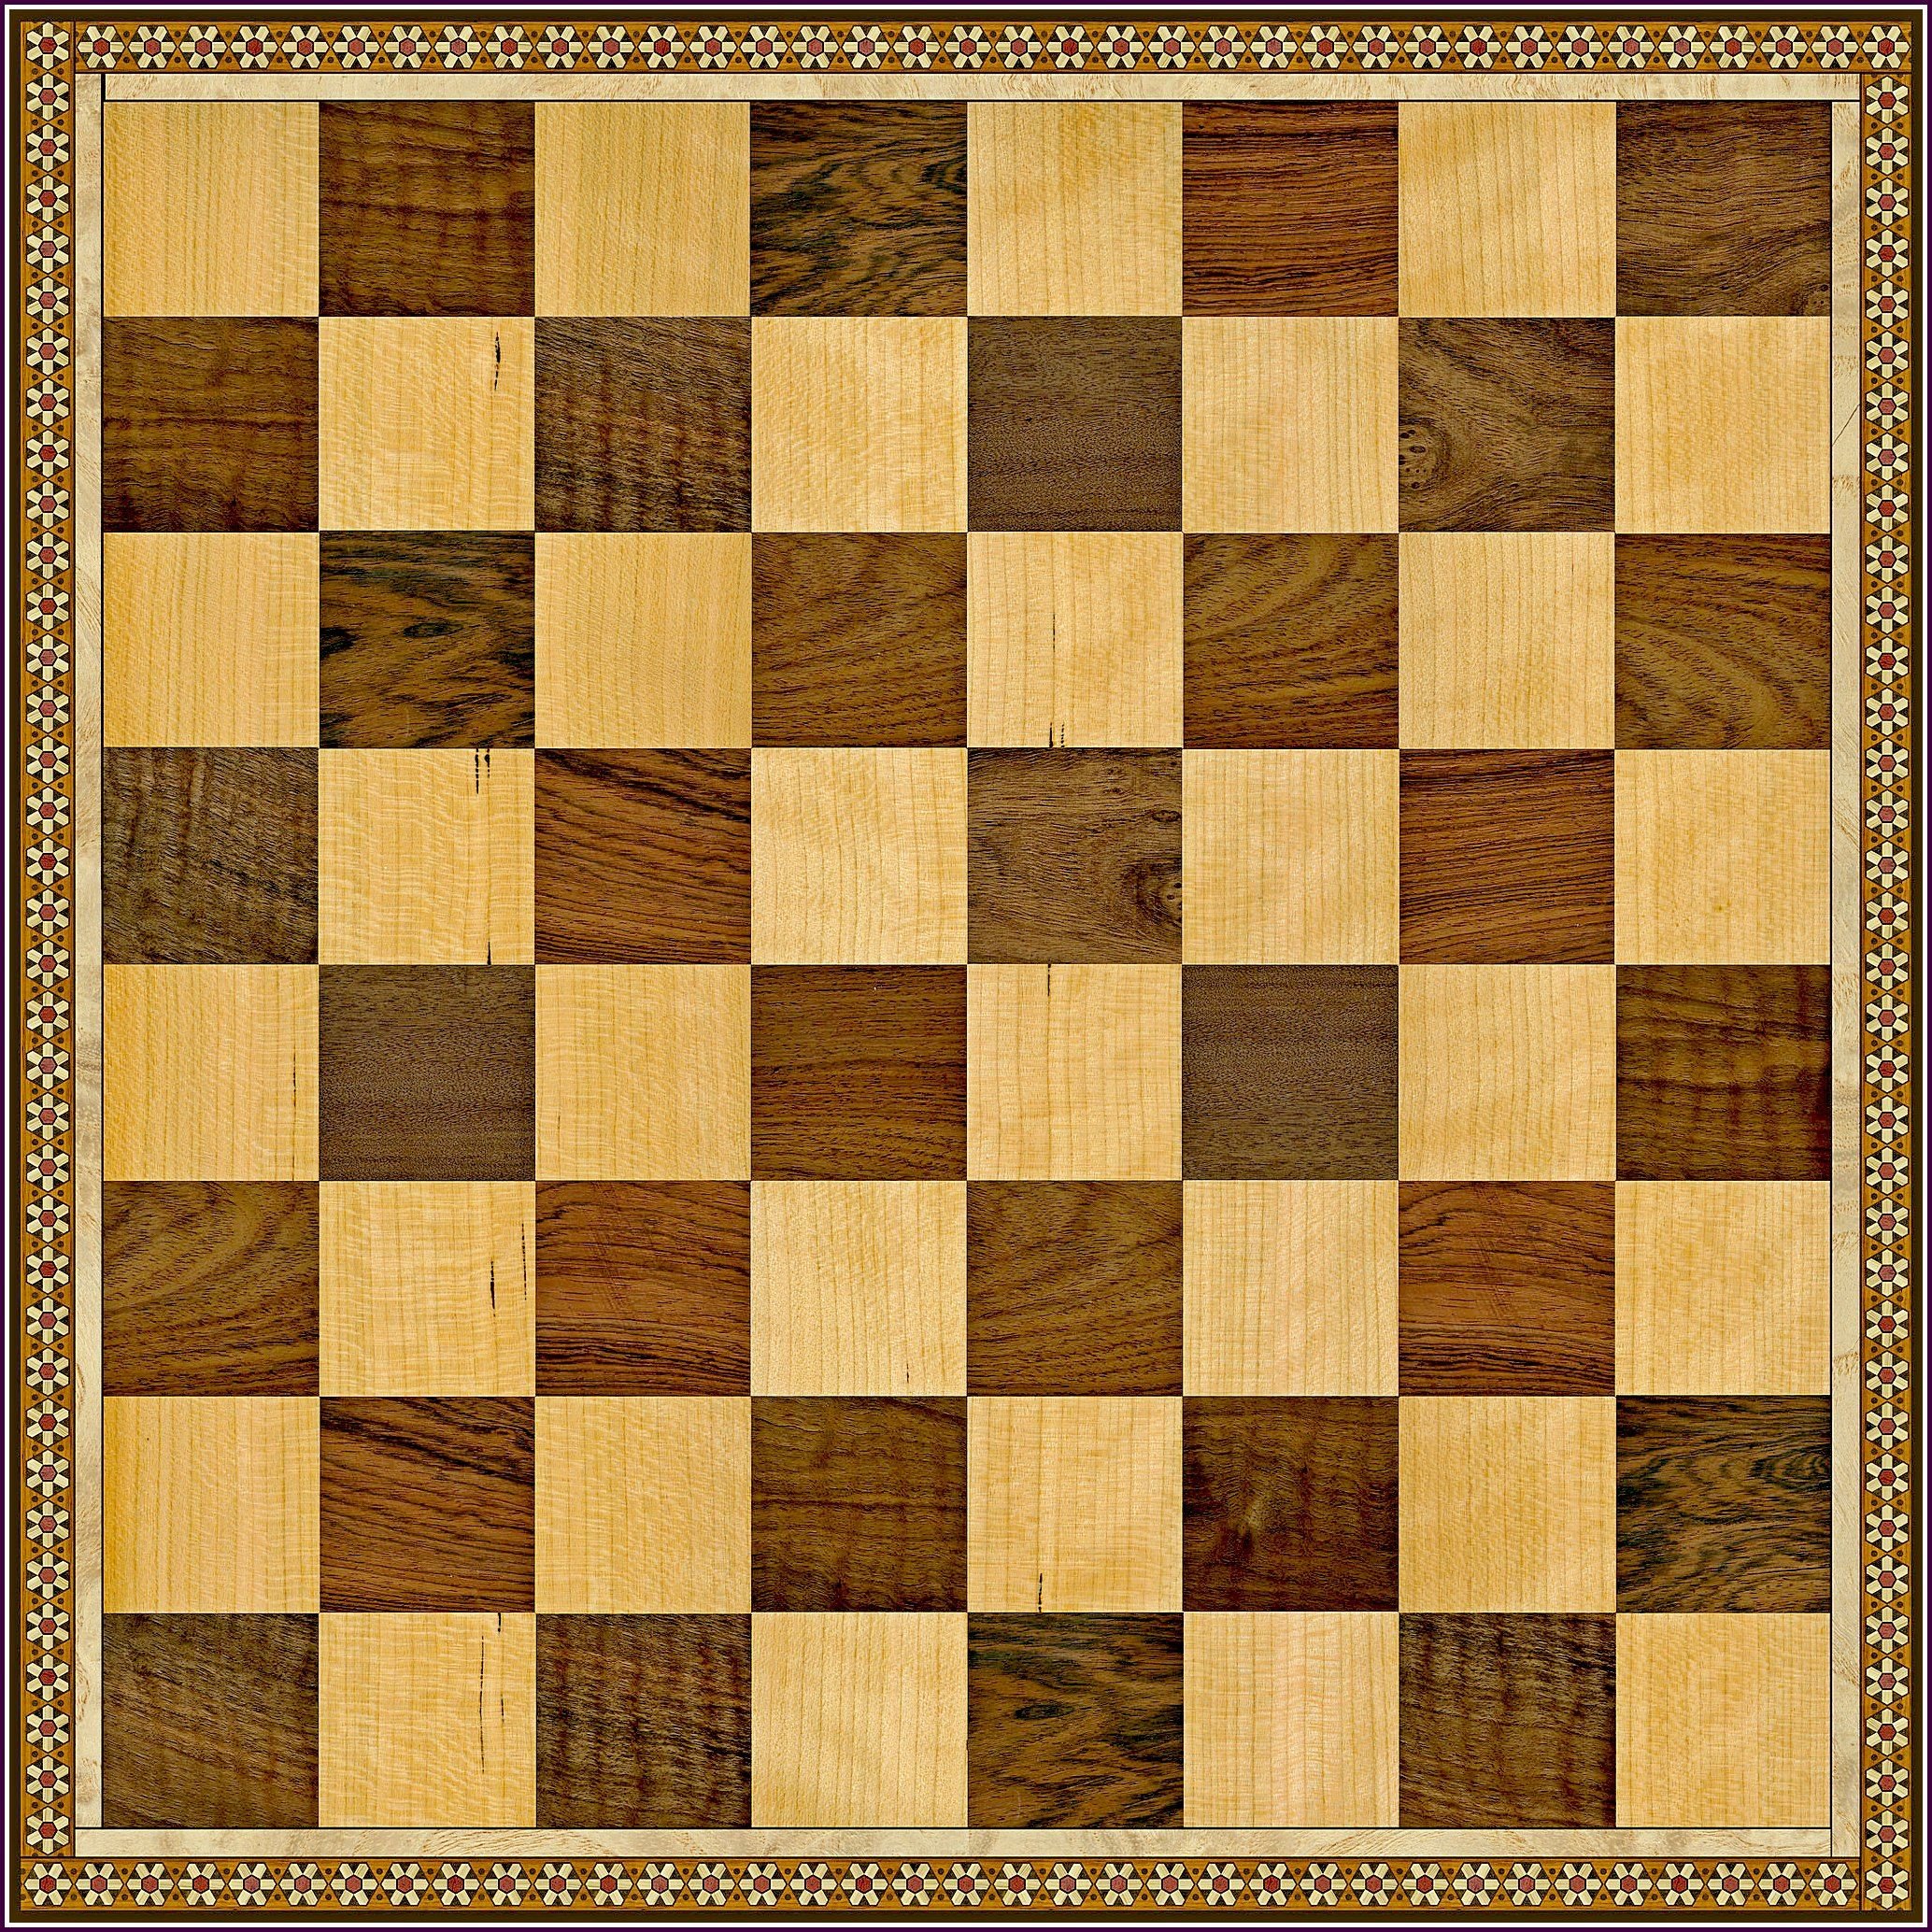 Chessboard. Шахматная доска. Шахматное поле. Шахматы доска. Шахматная доска деревянная.